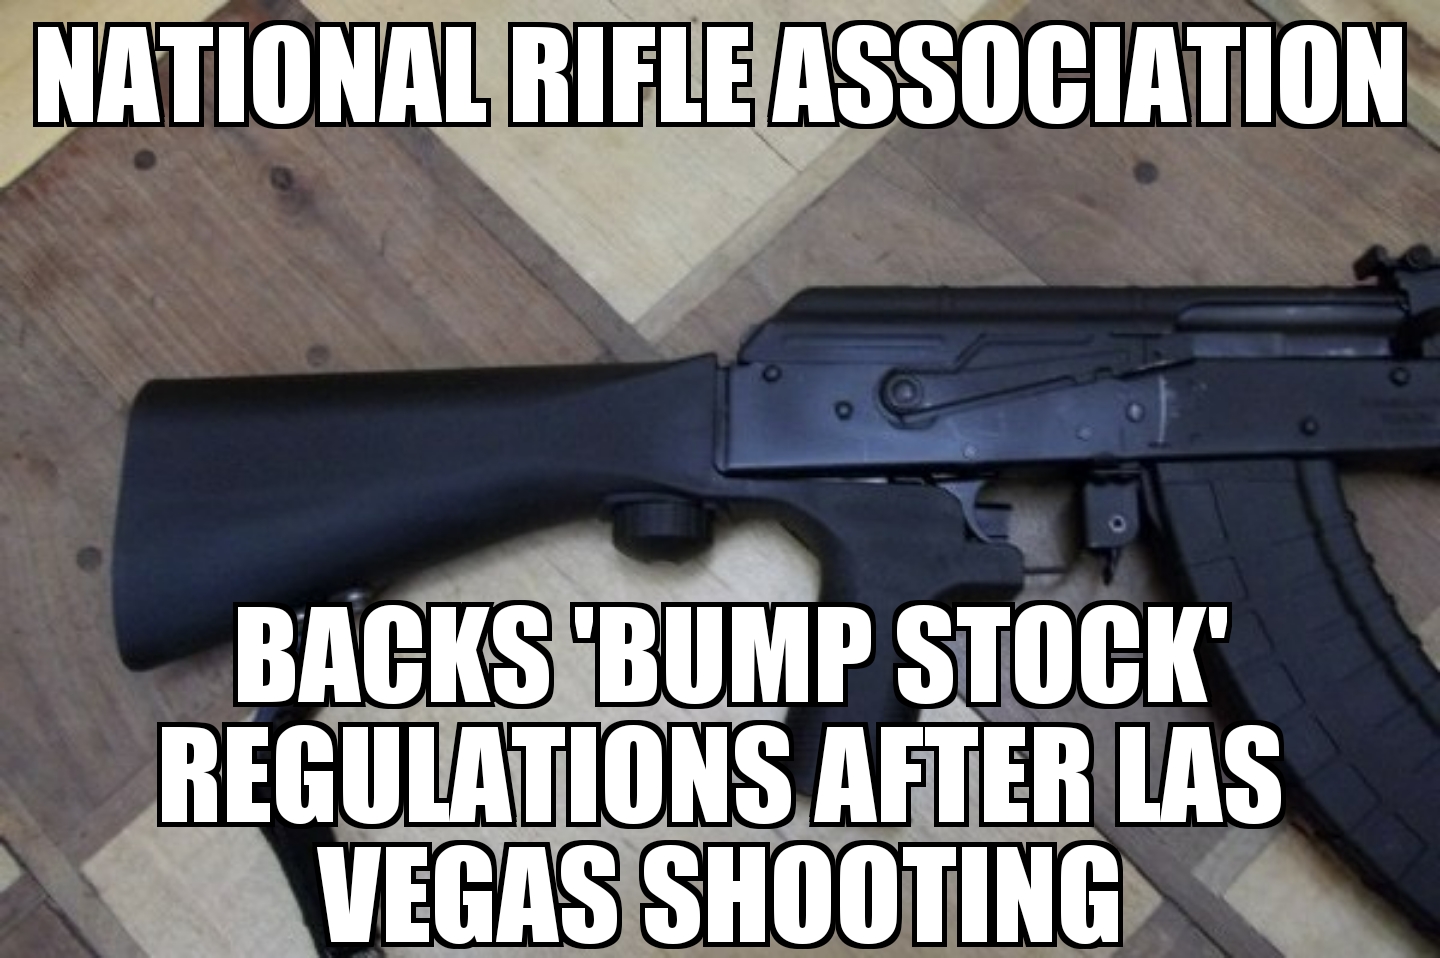 NRA backs ‘bump stock’ regulations